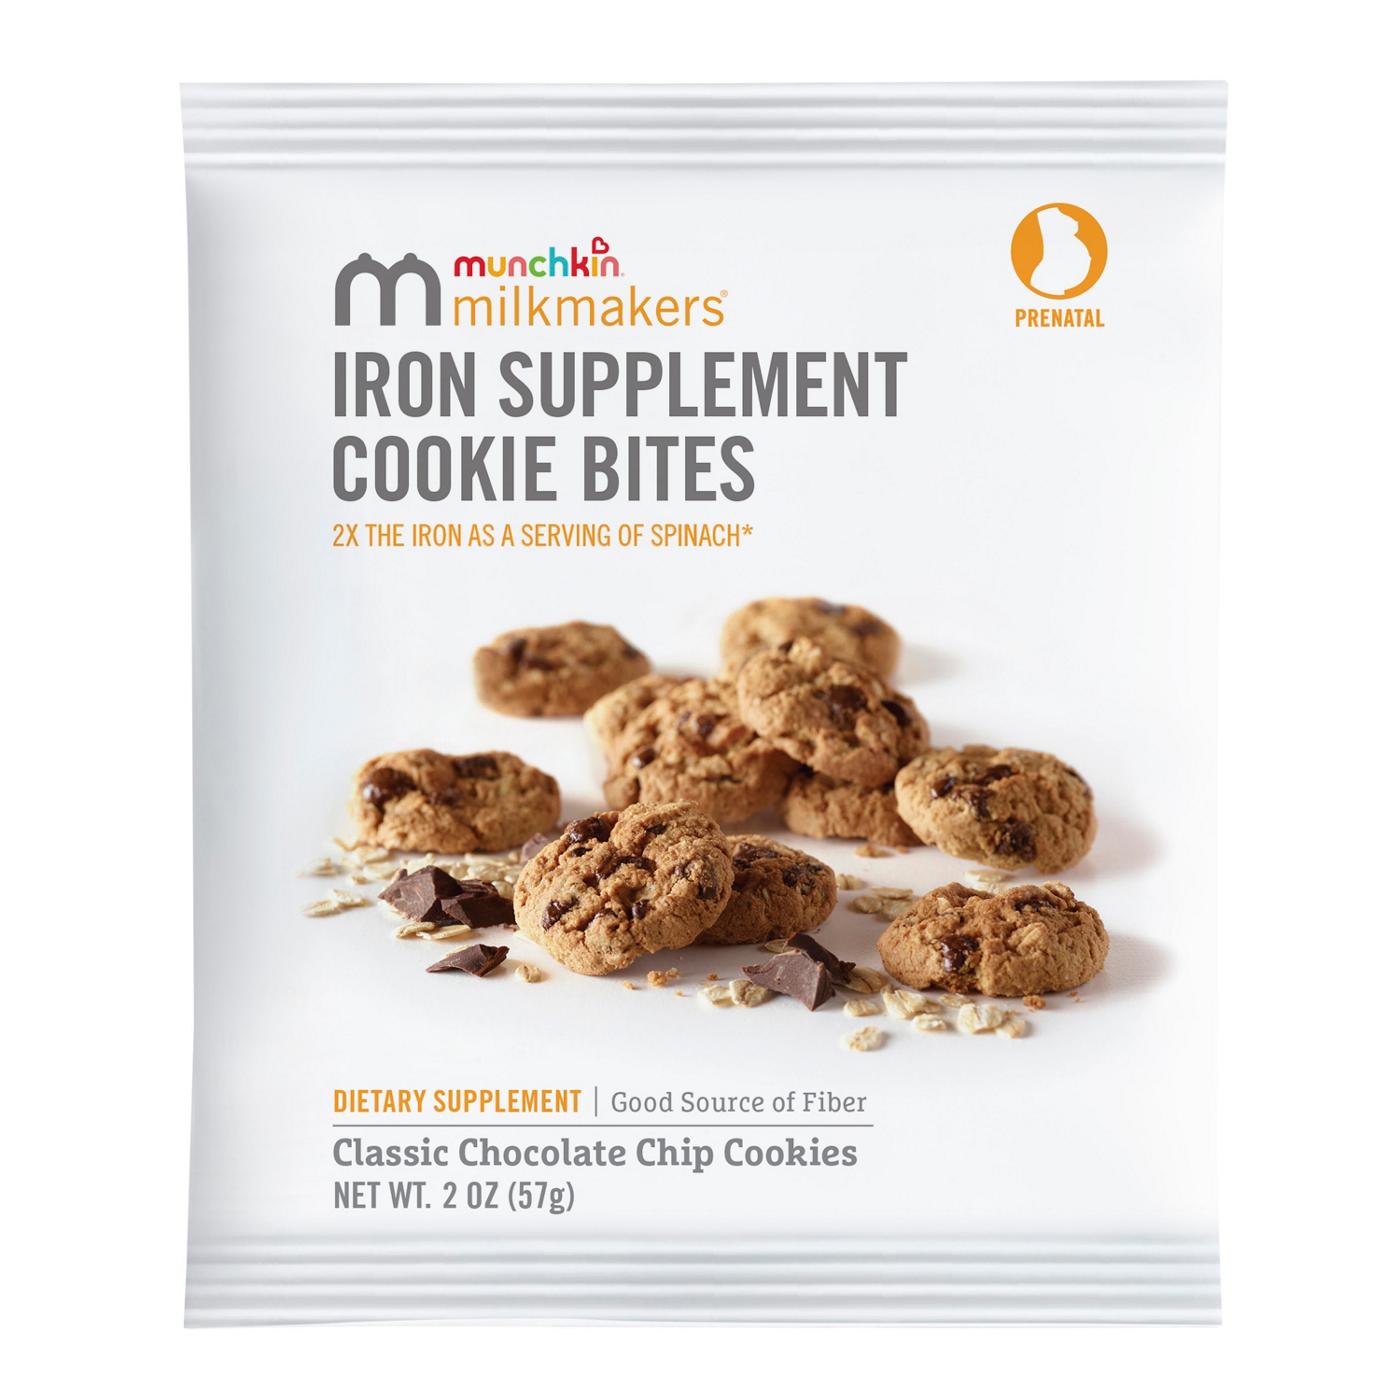 Munchkin Milk Makers Iron Supplement Cookie Bites Chocolate Chip; image 2 of 2